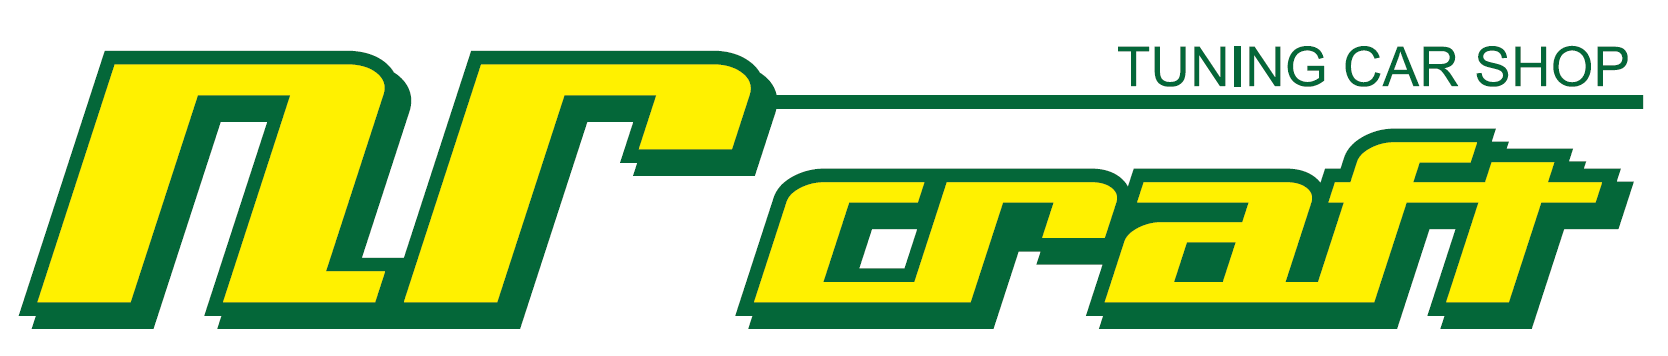 GkA[Ntginrcraftj_logo1